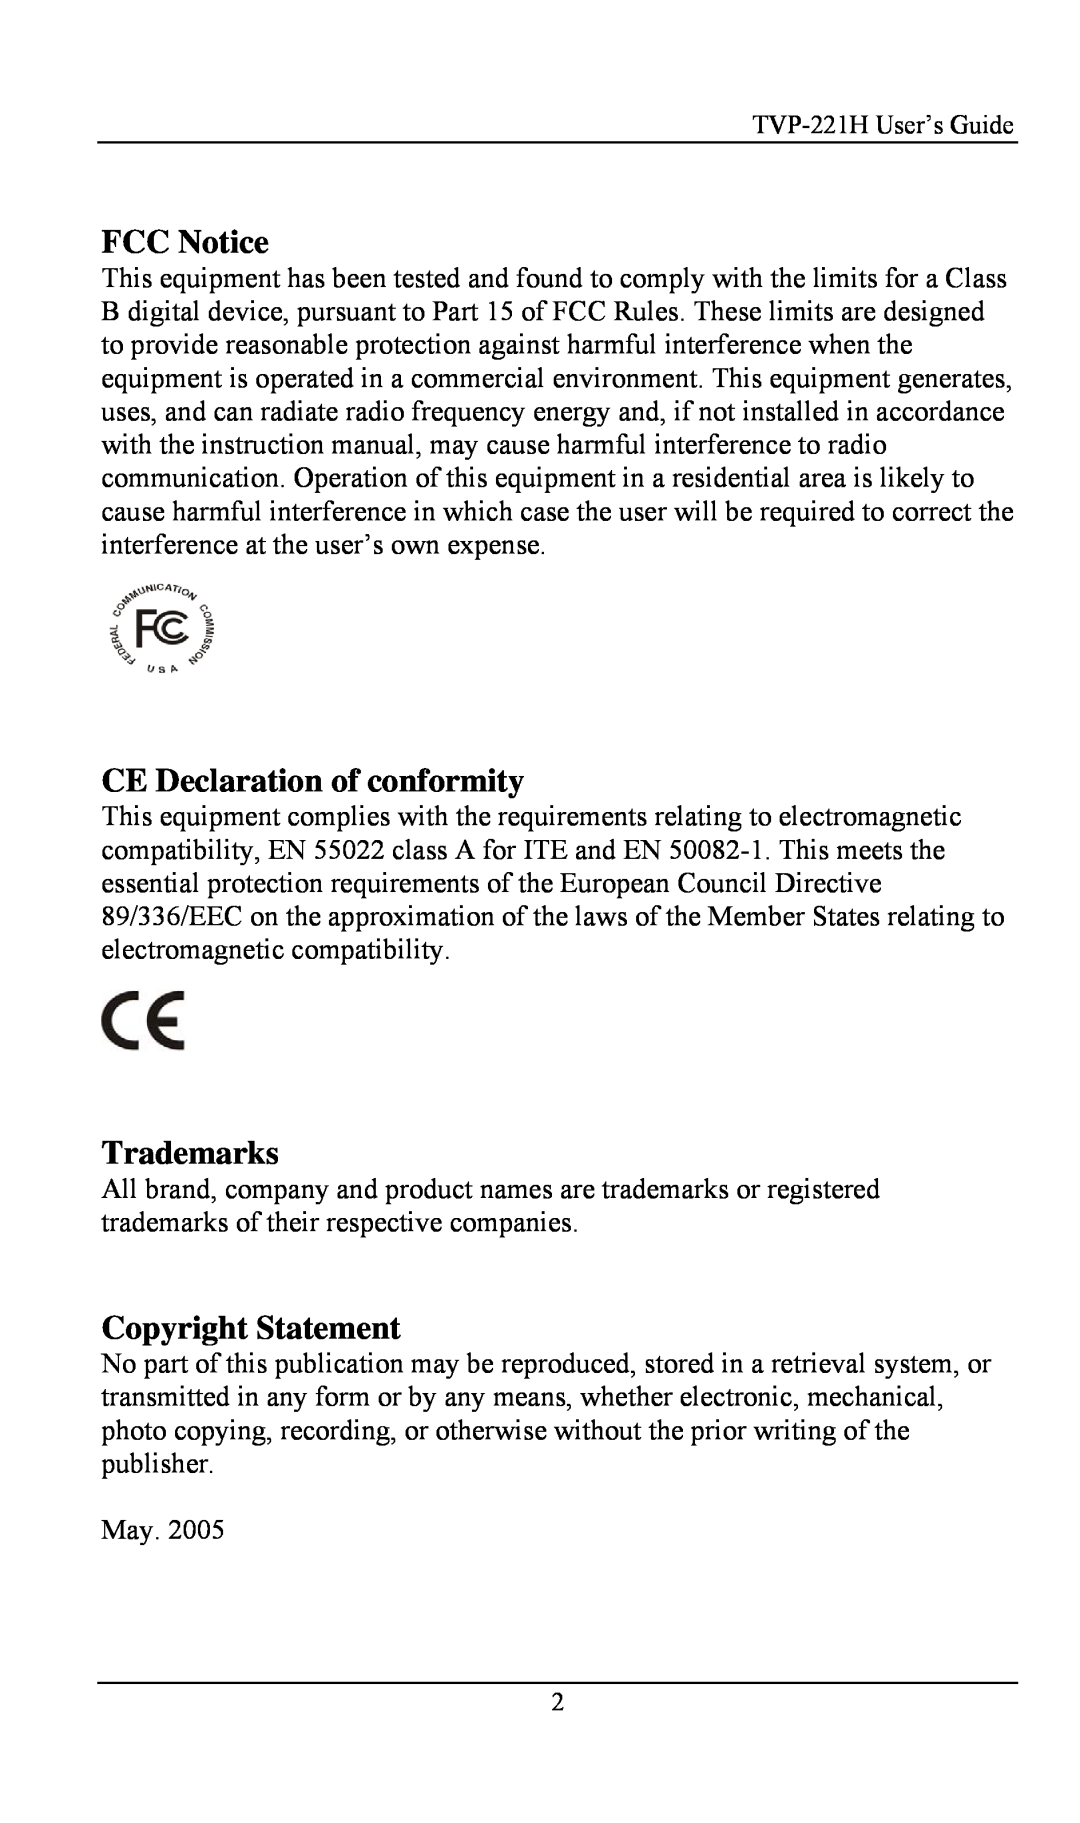 TRENDnet TVP- 221H, VoIP Gateway manual FCC Notice, CE Declaration of conformity, Trademarks, Copyright Statement 